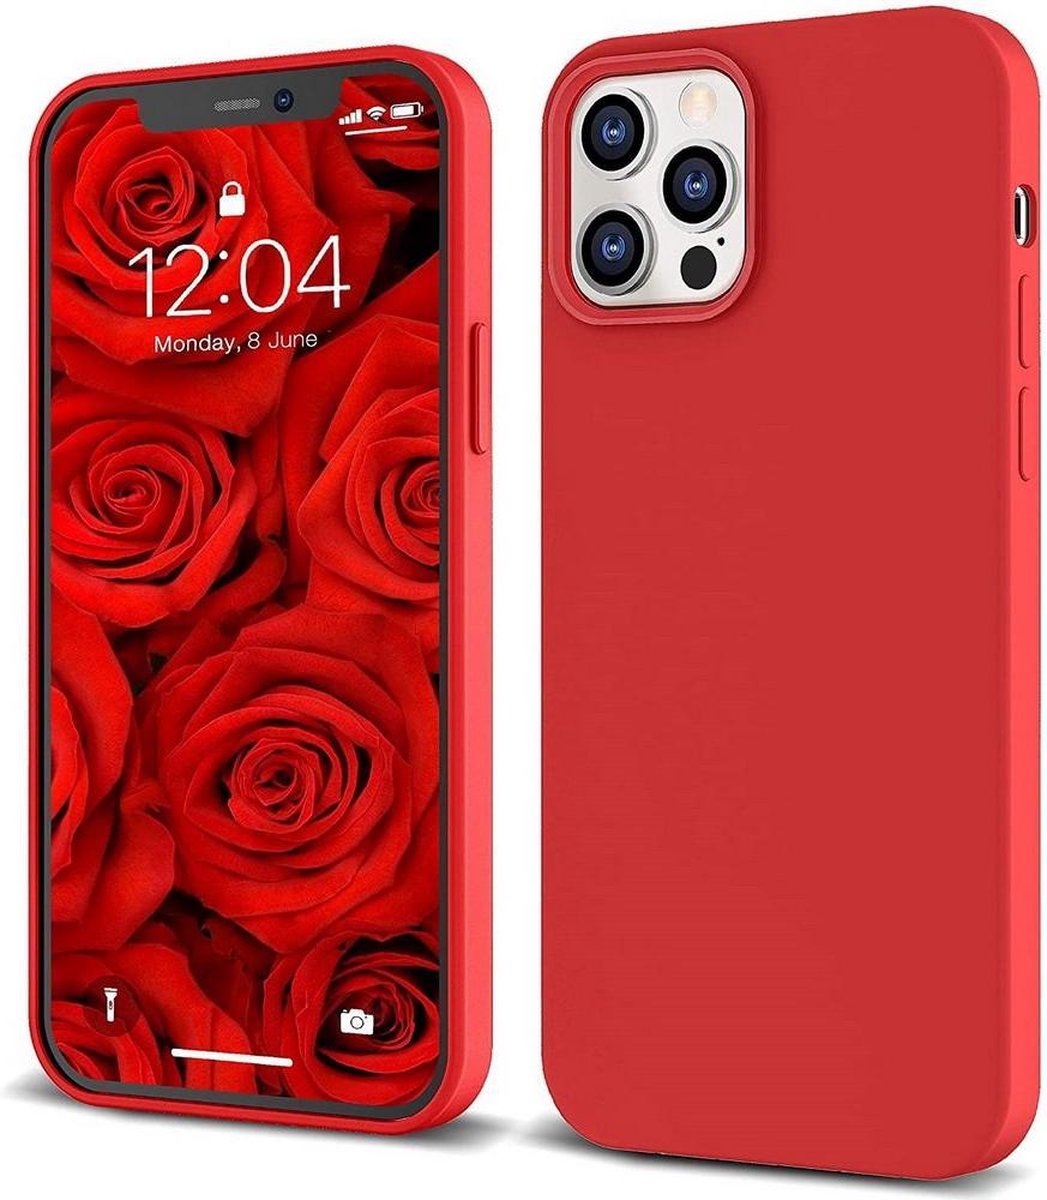 Juicyy iPhone 12 Pro Max siliconen hoesje - Rood / Juicyy iPhone 12 Pro Max silicone case - Red